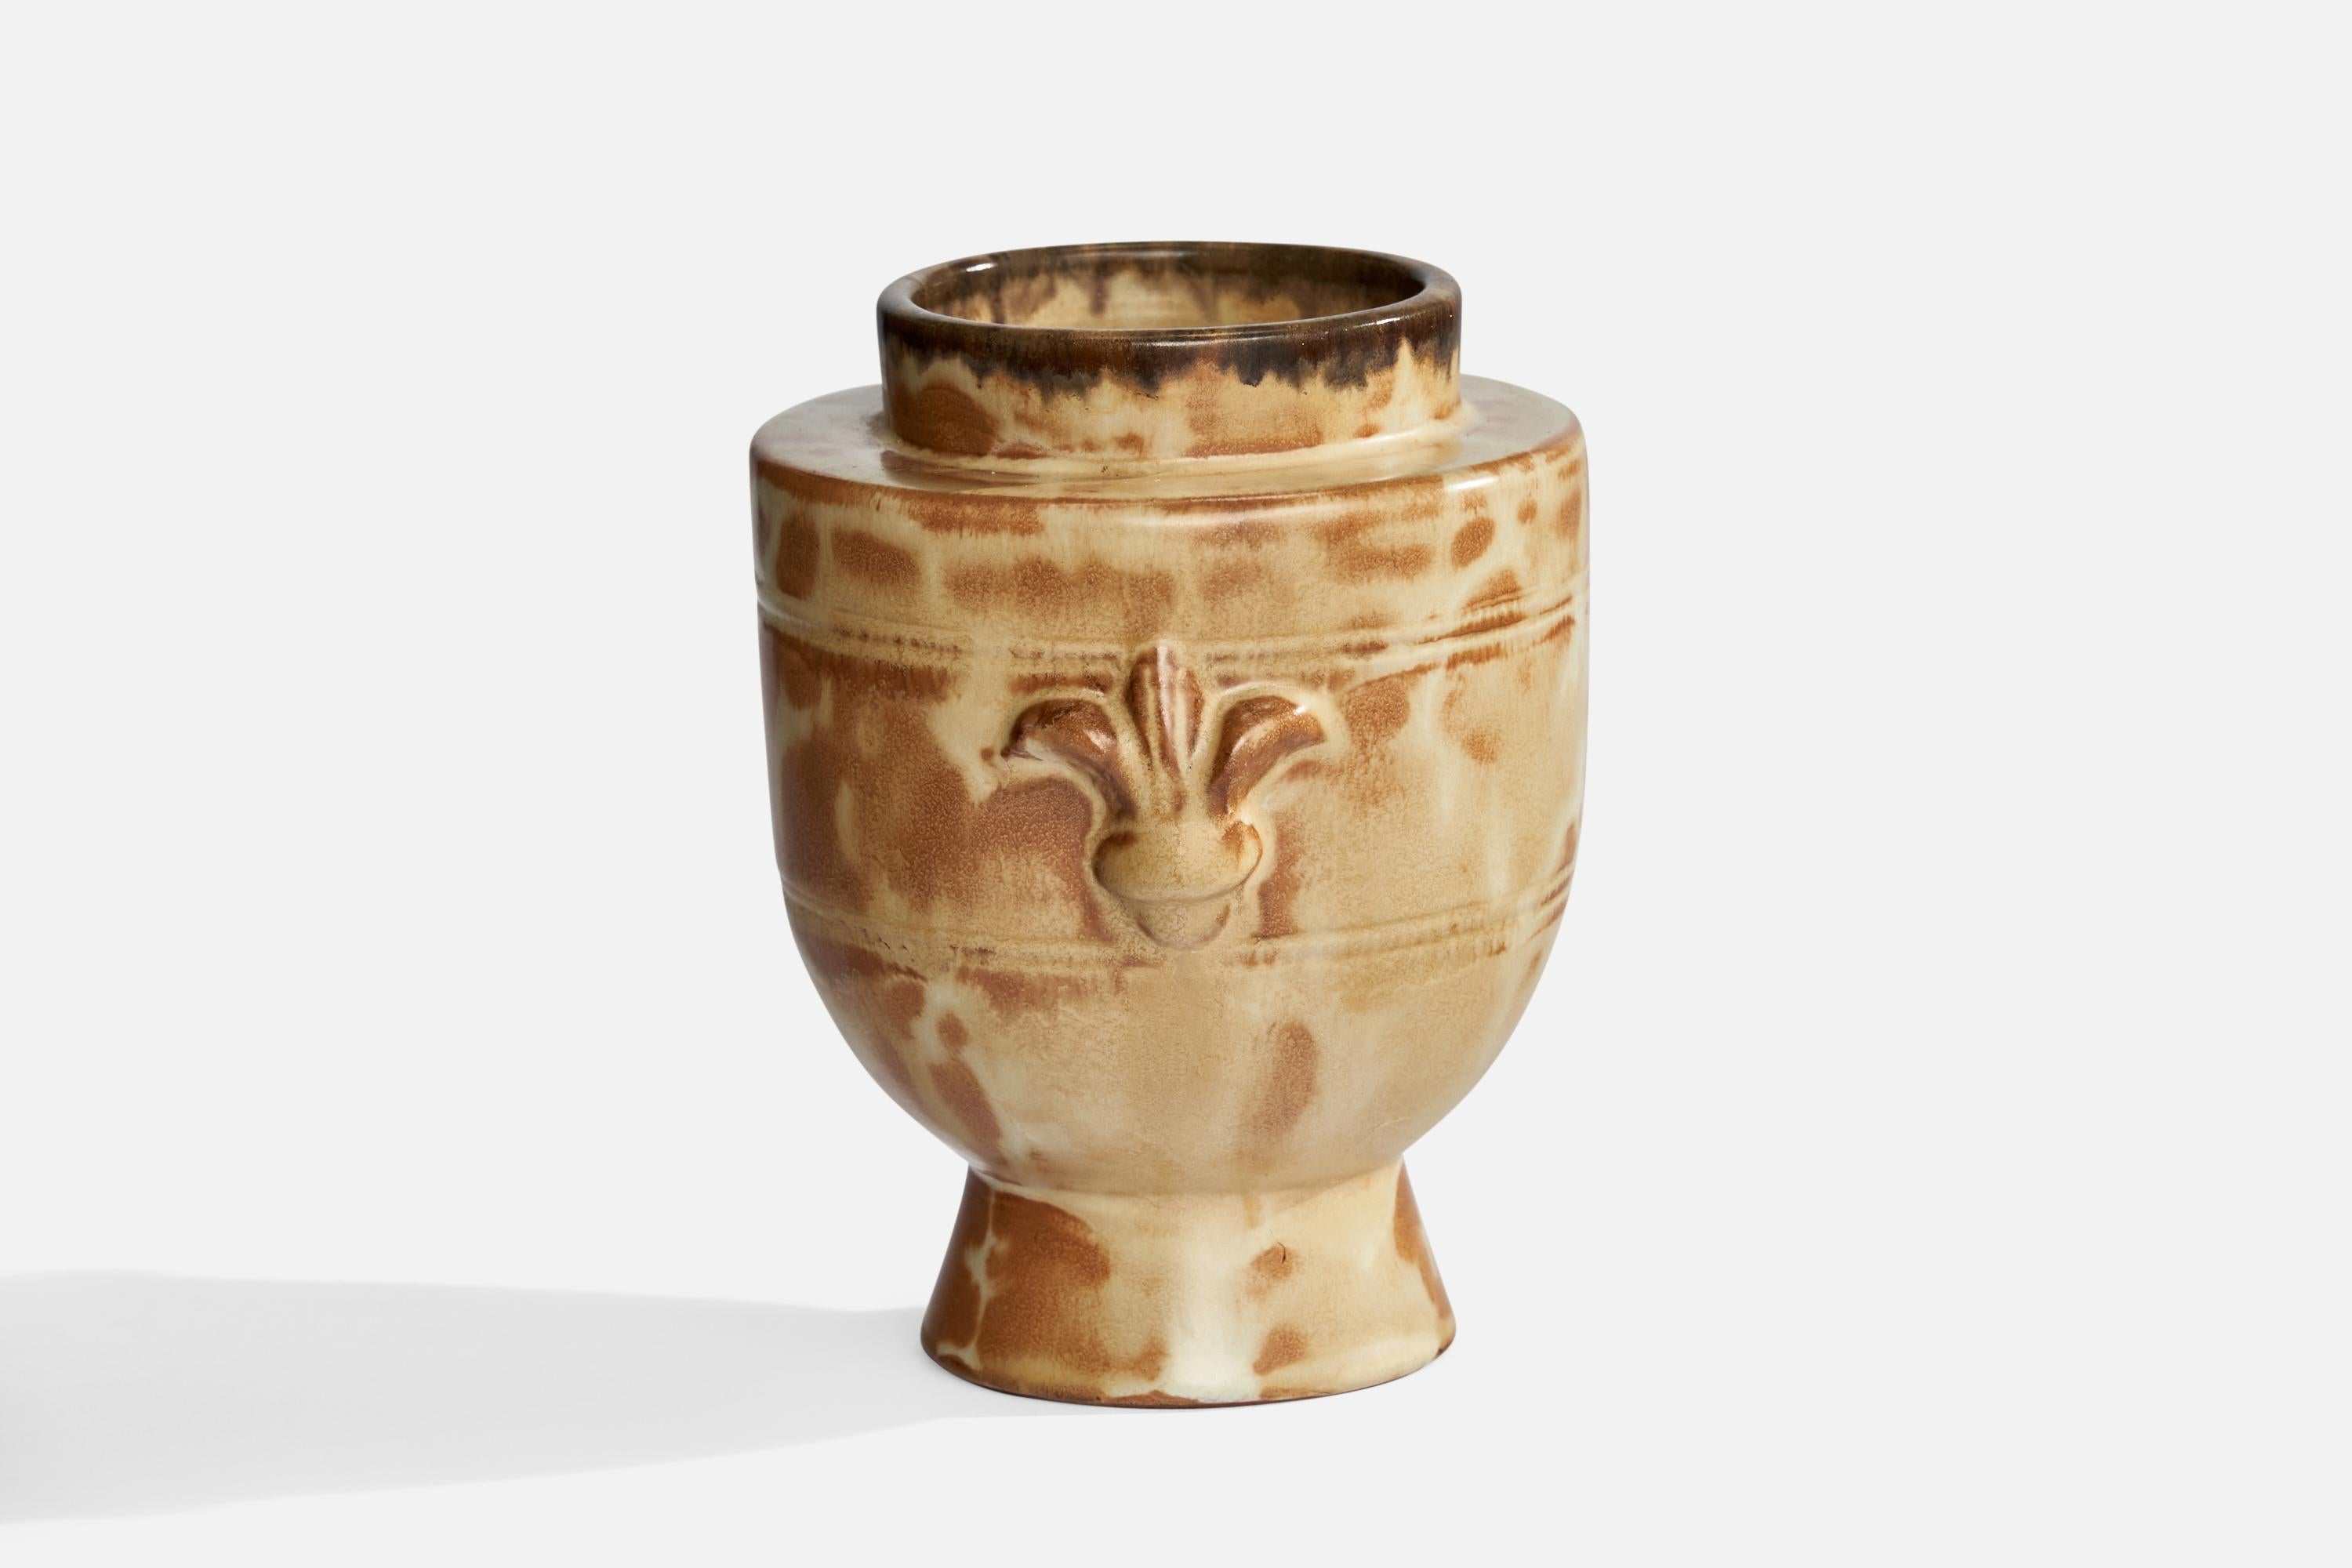 A beige and brown-glazed earthenware vase designed and produced by Upsala Ekeby, Sweden, 1930s.